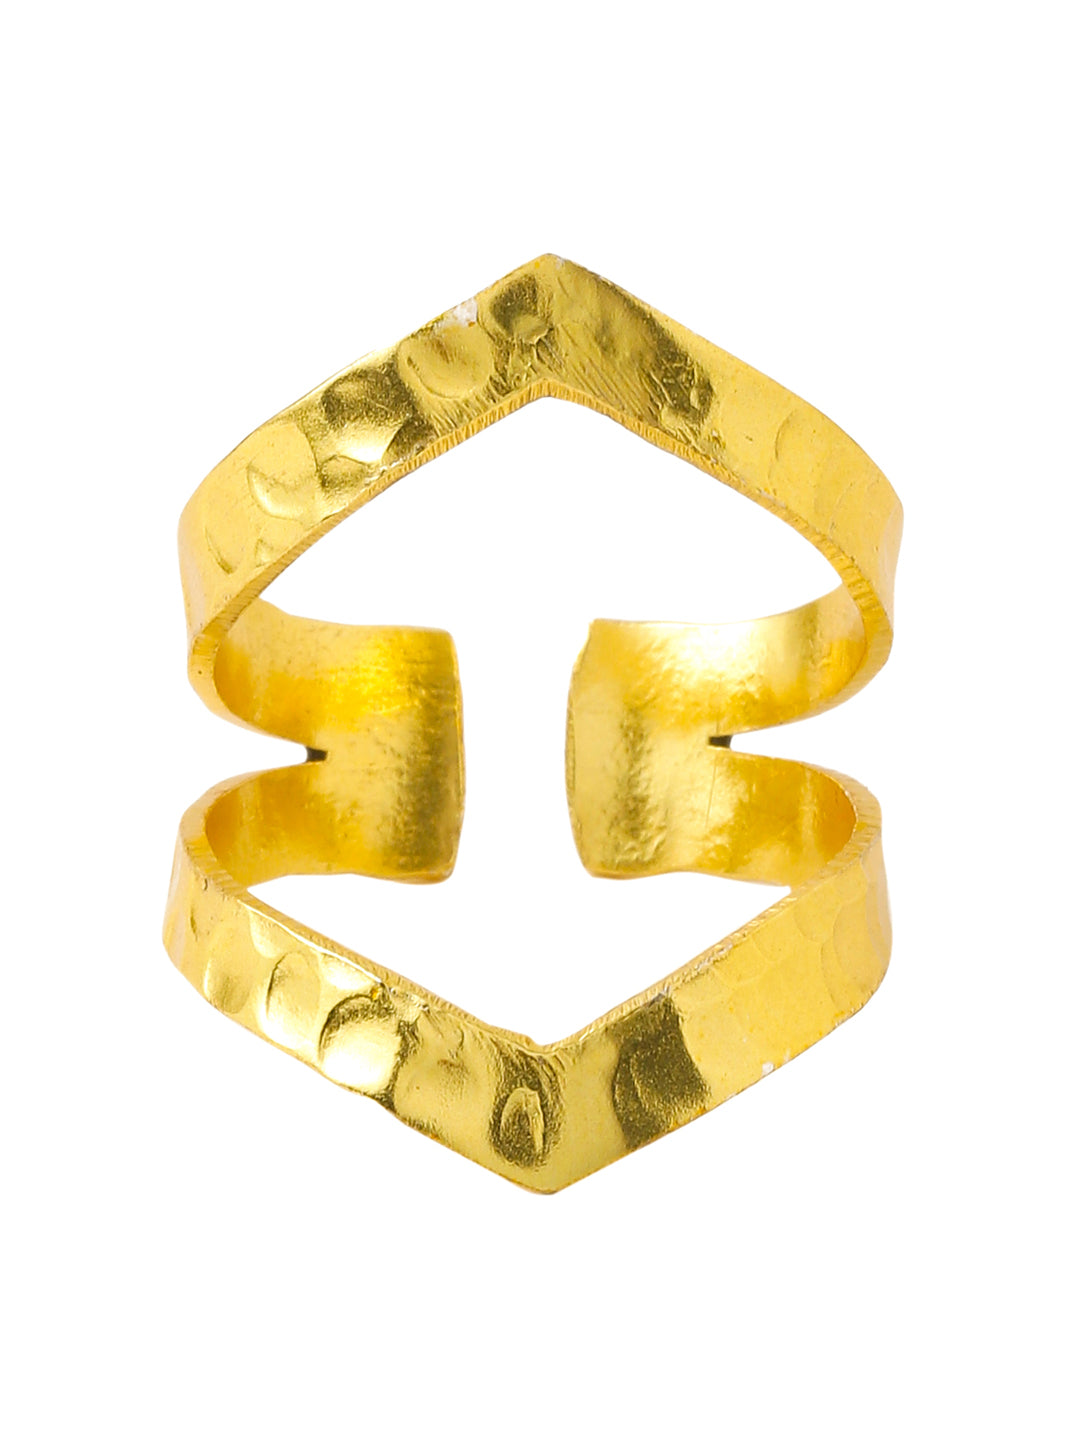 Women's Gold Plated adjustable finger Ring - NVR